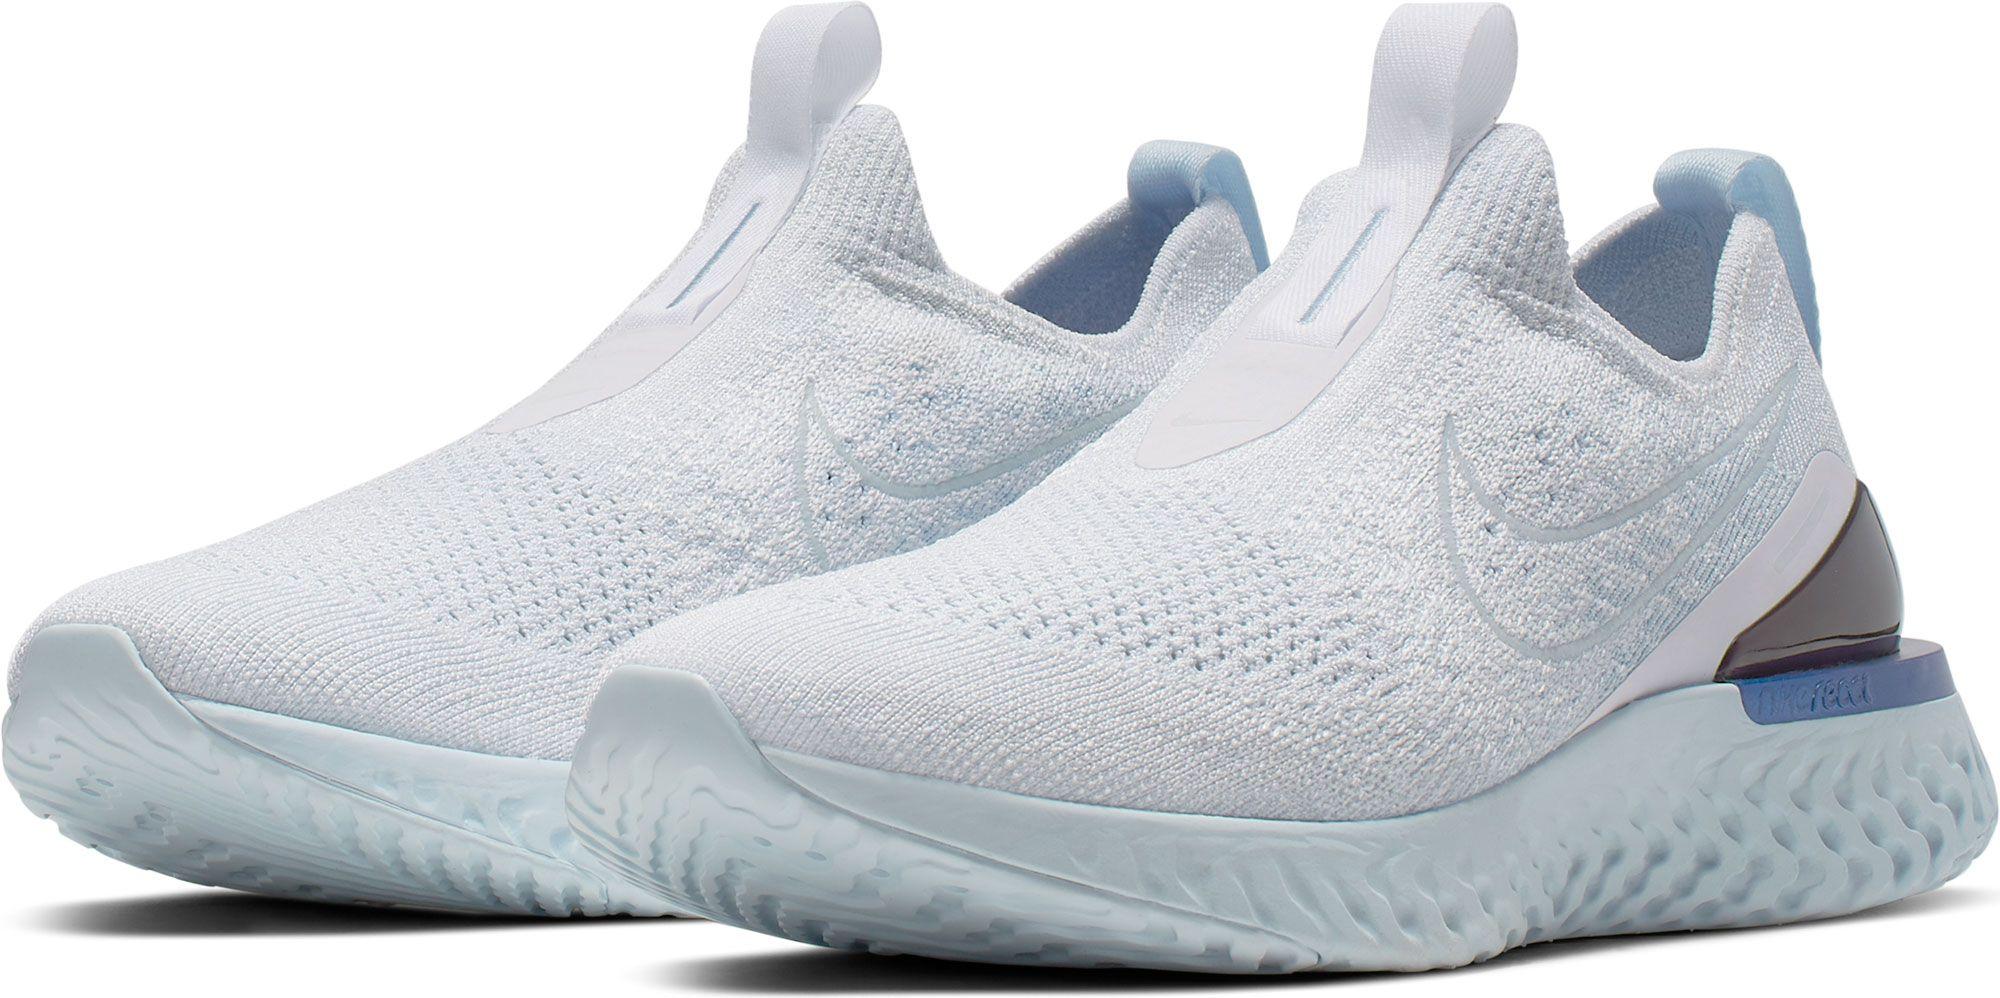 Nike Rubber Epic Phantom React Flyknit Running Shoes in White/Blue ...